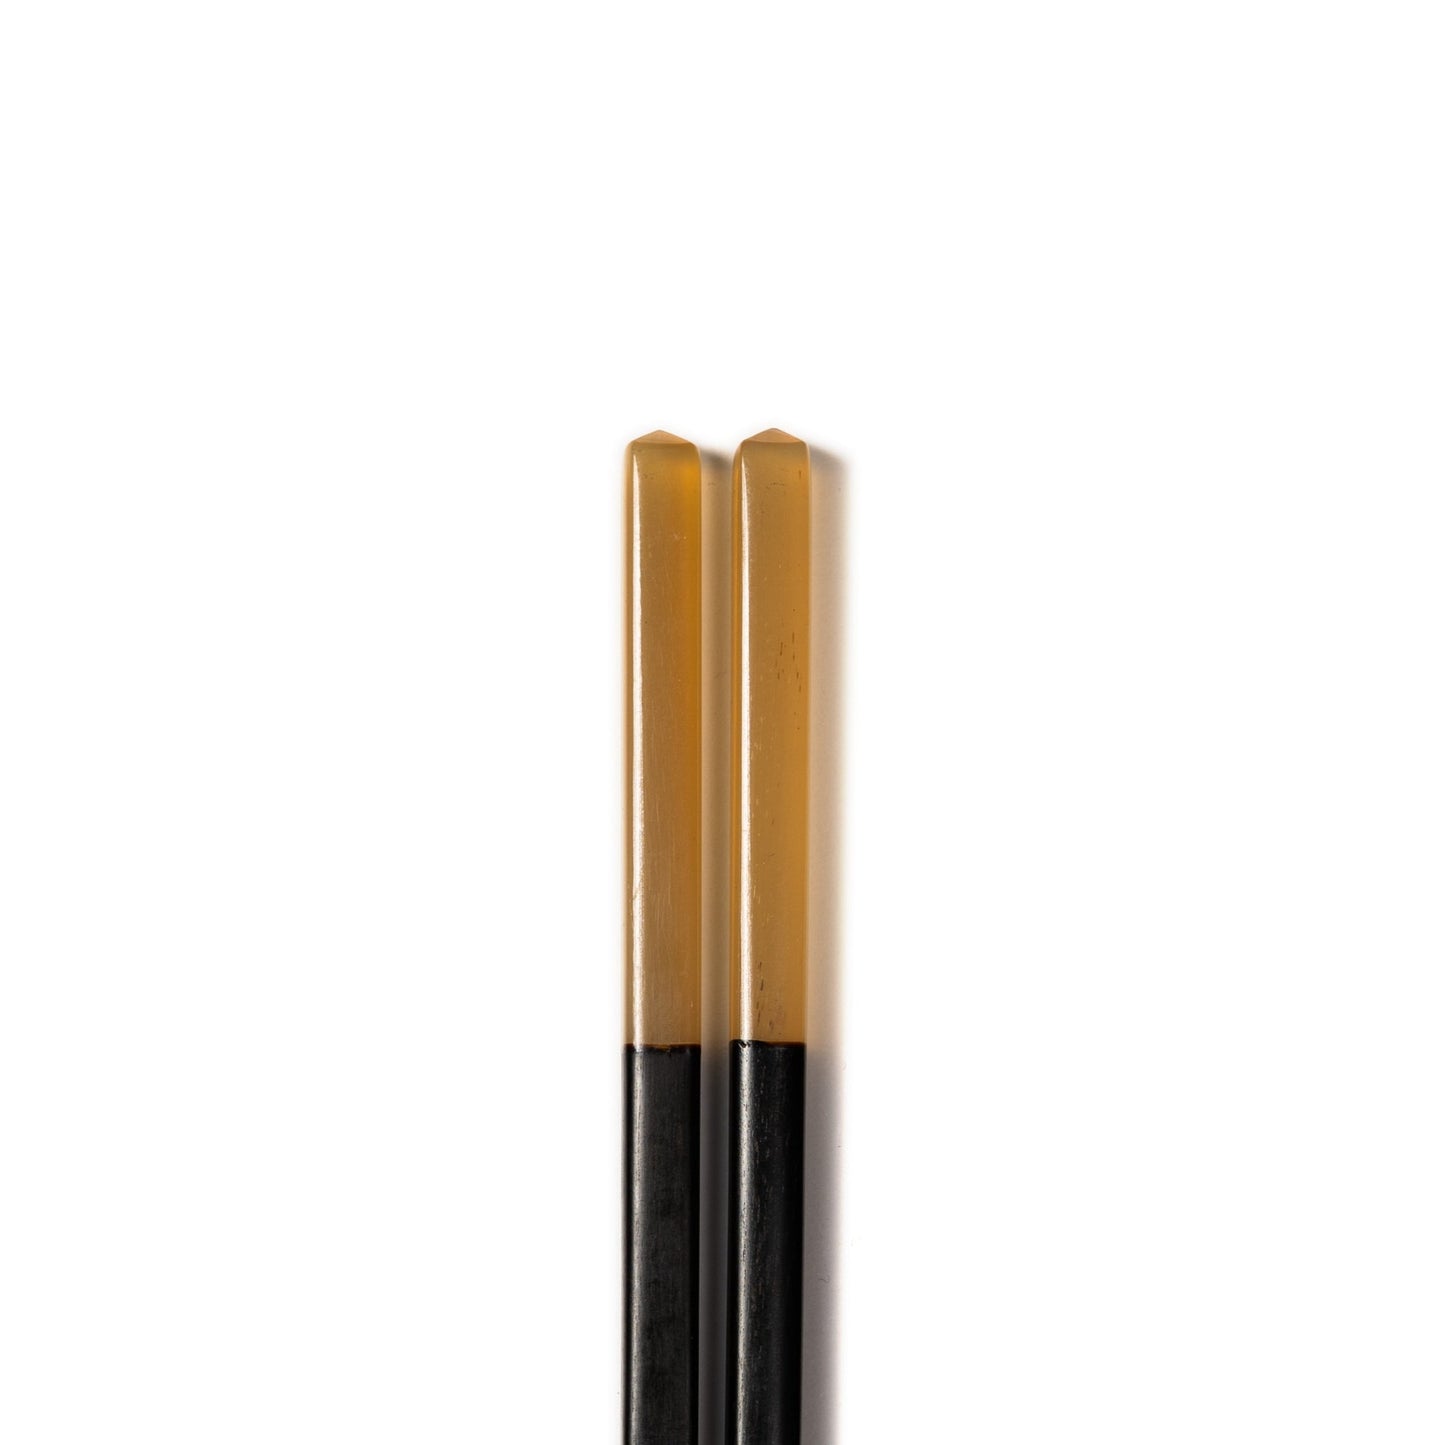 Square Black Wood Chopsticks with Natural Horn Tip